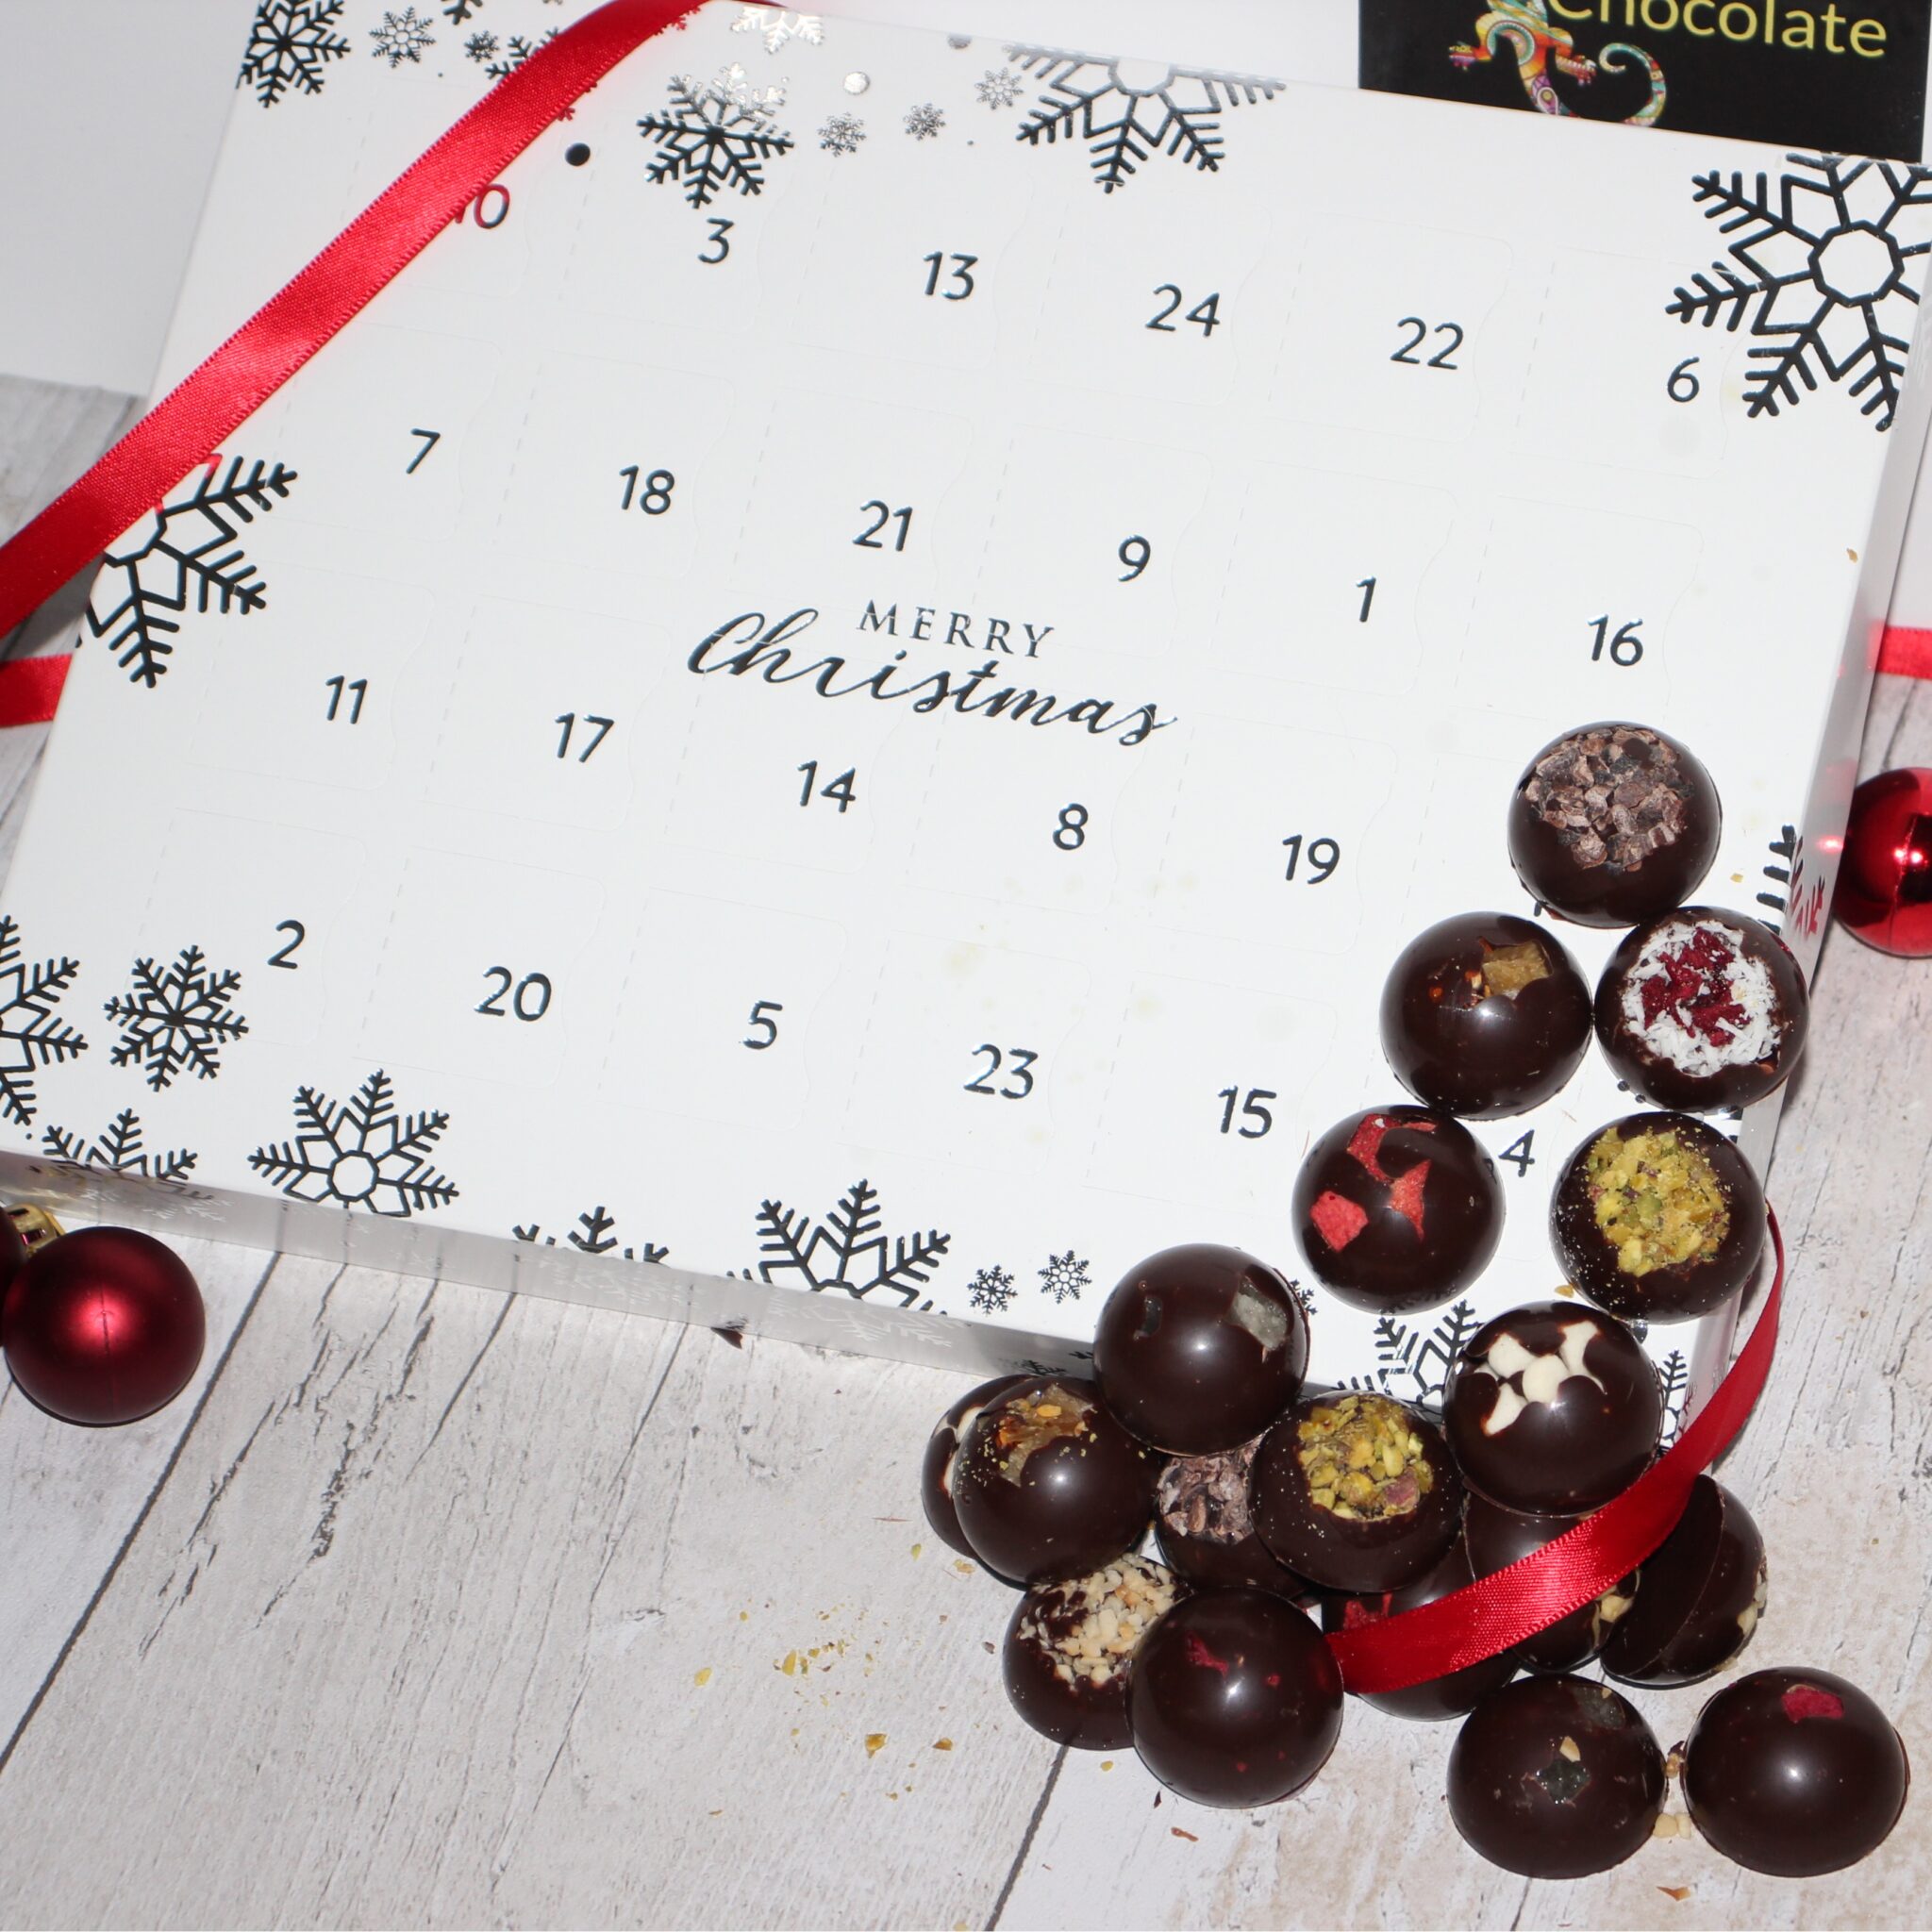 PRE ORDER dark chocolate Christmas advent calendar vegan friendly